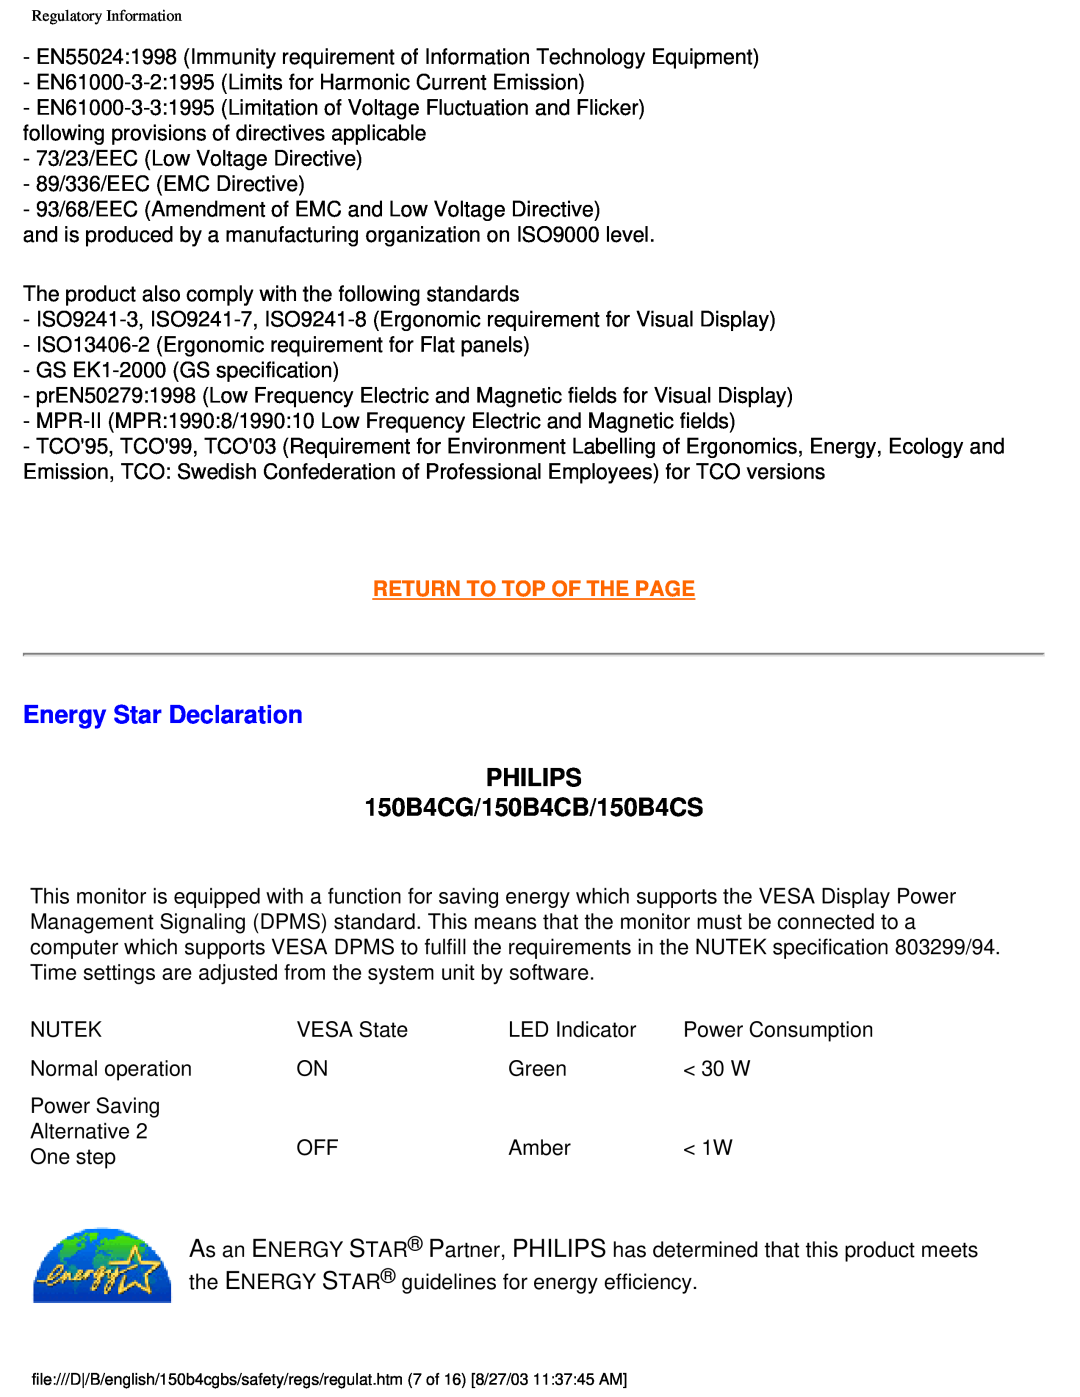 Philips user manual Energy Star Declaration, PHILIPS 150B4CG/150B4CB/150B4CS, Return To Top Of The Page 